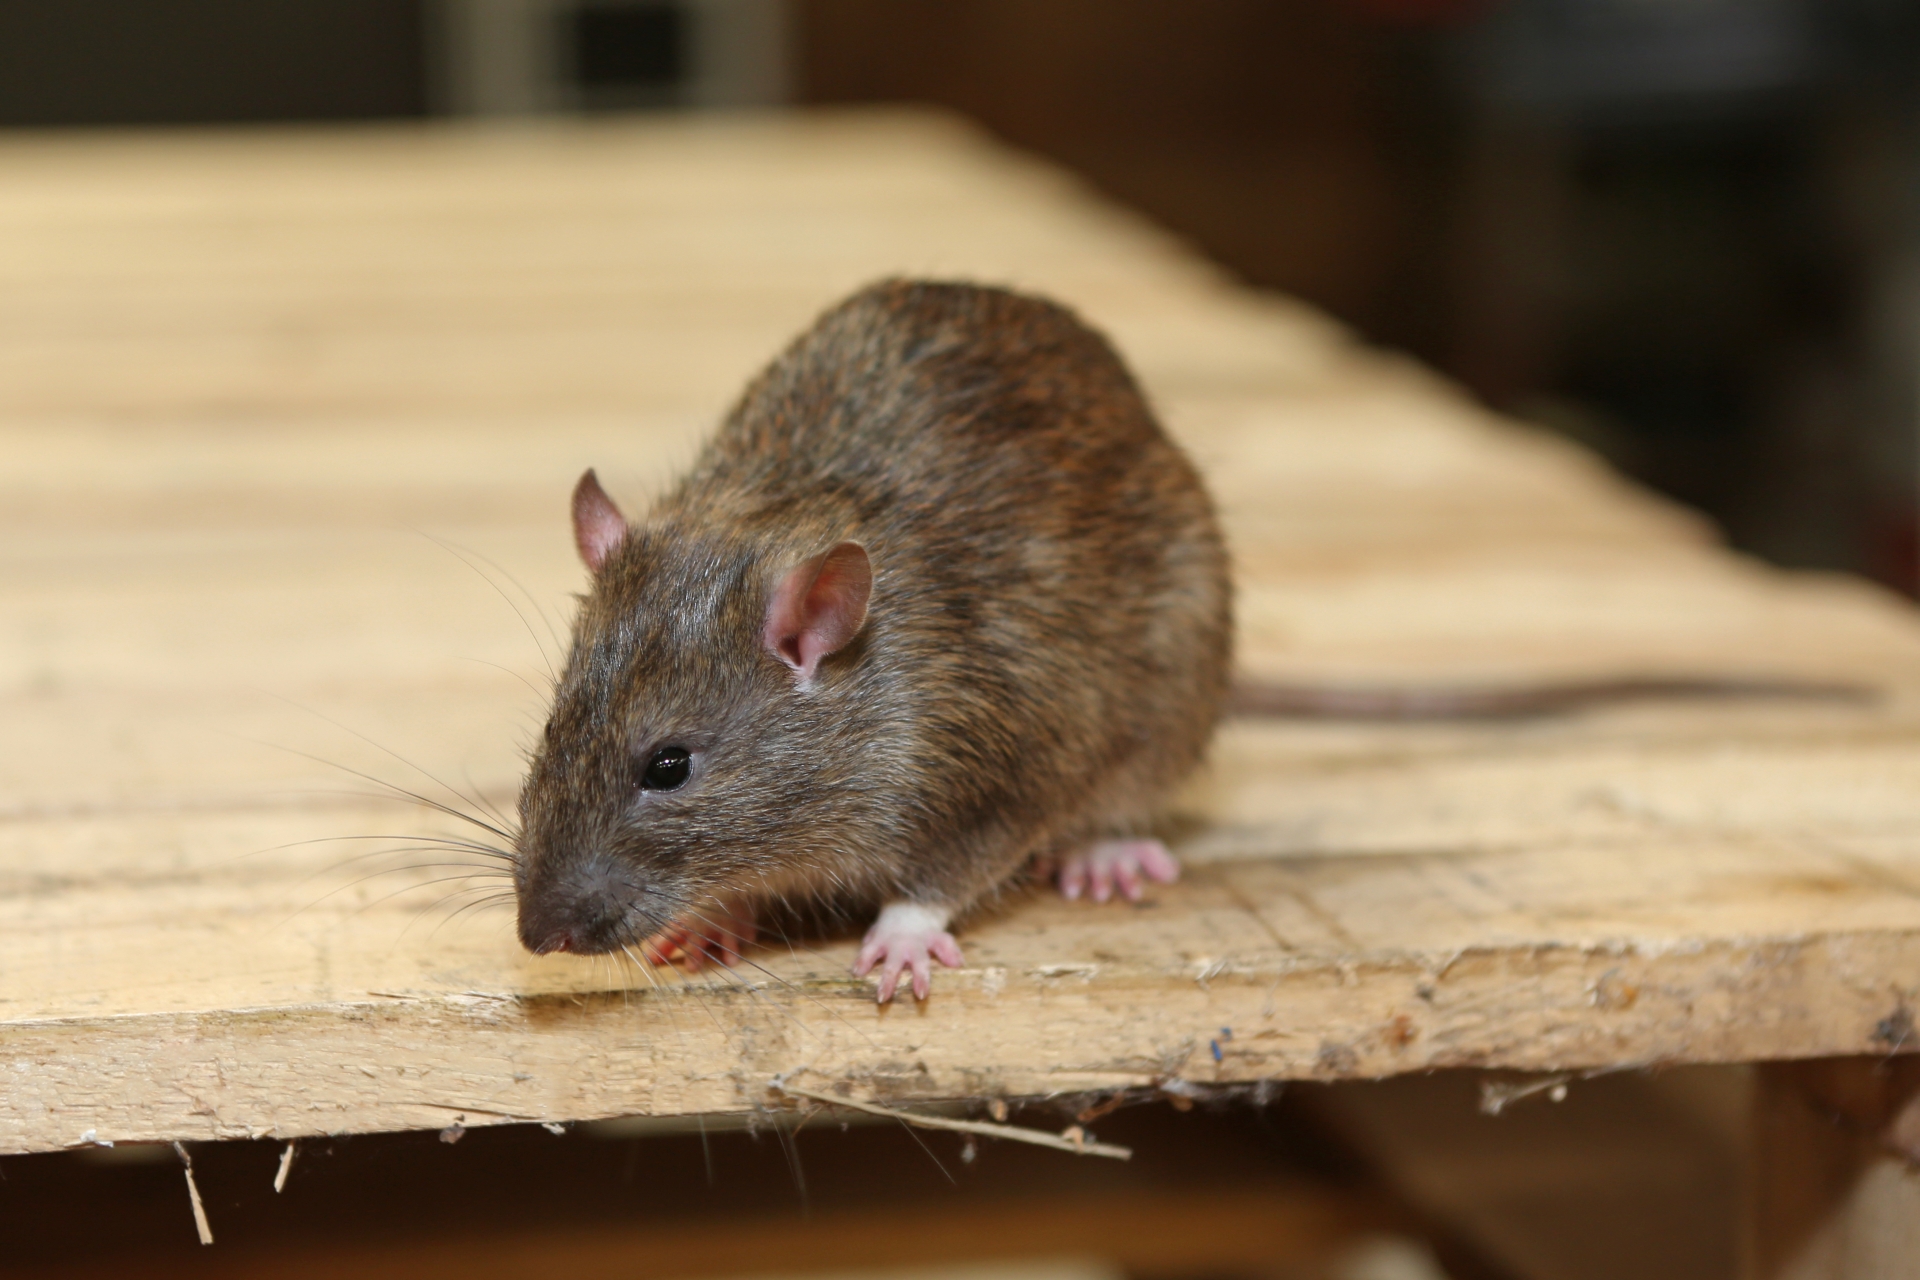 Rat Infestation, Pest Control in West Kensington, W14. Call Now 020 8166 9746